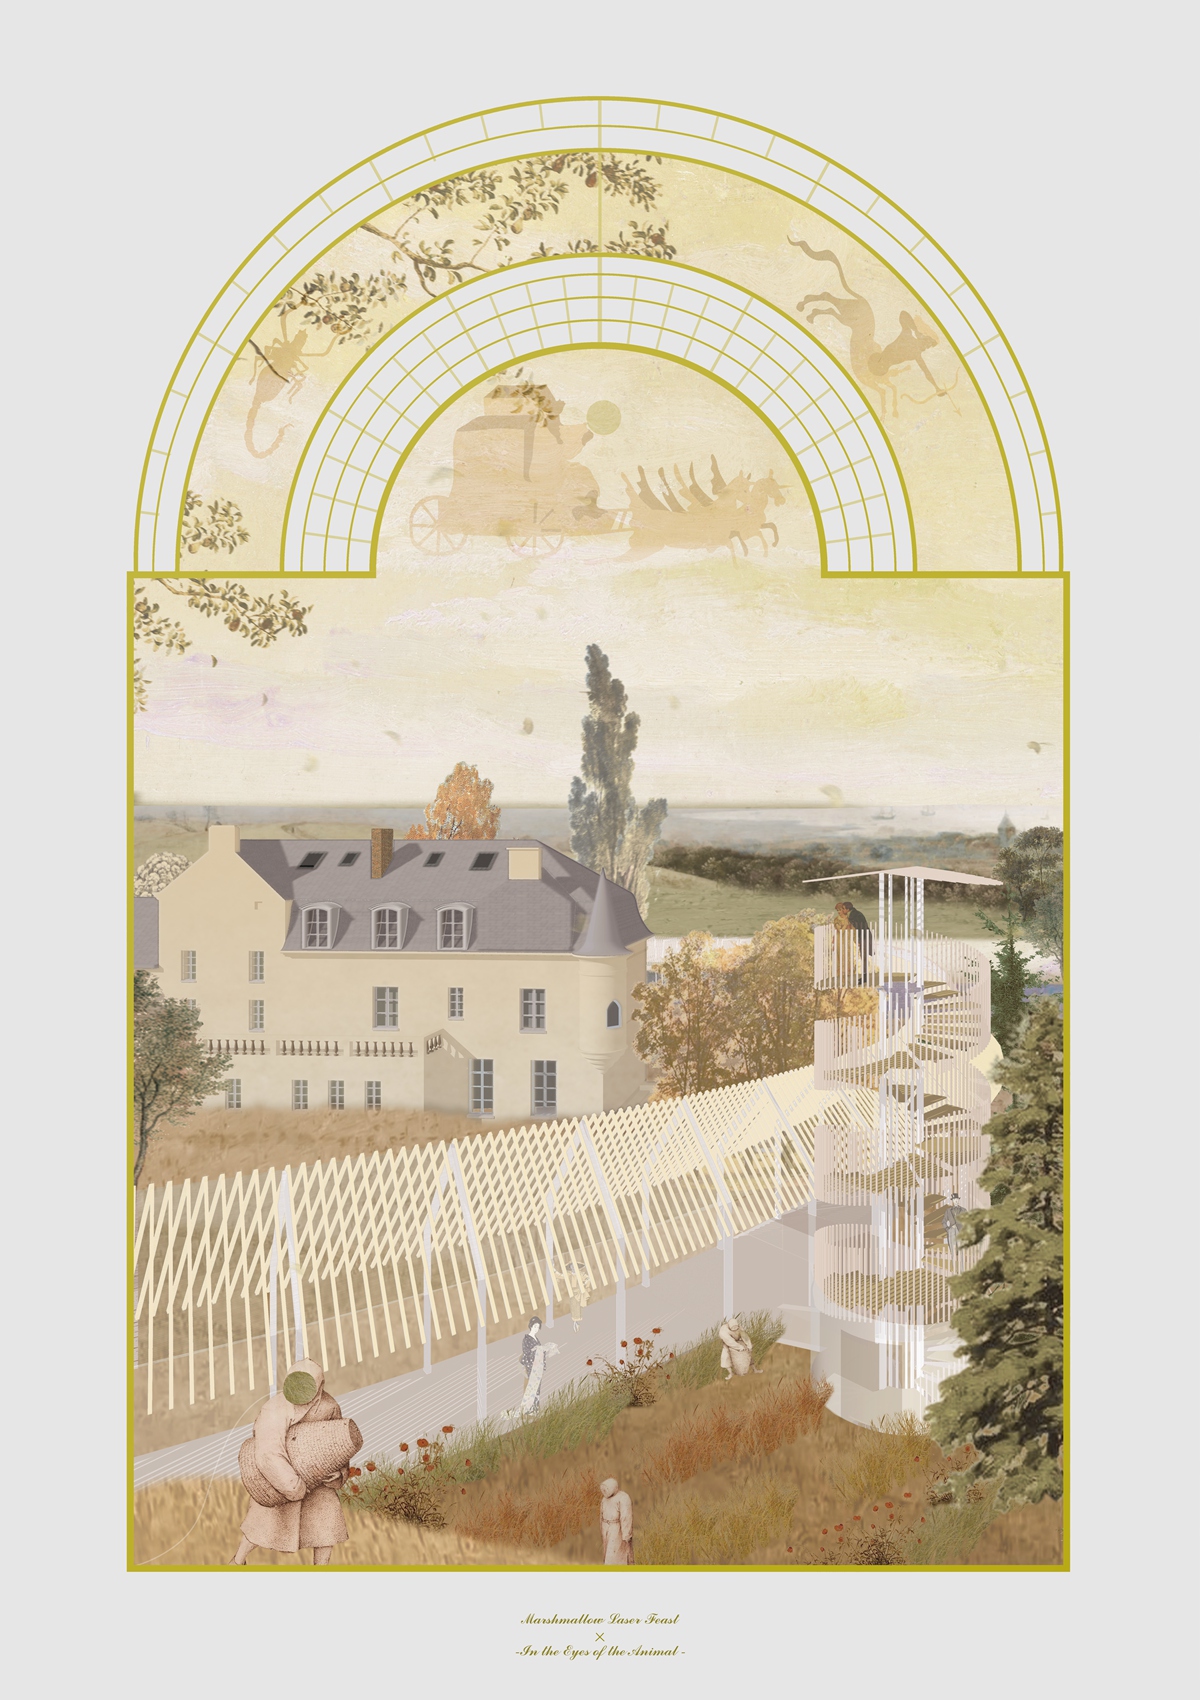 The Misty Chateau —— Renovation of Chateau d'hacqueville